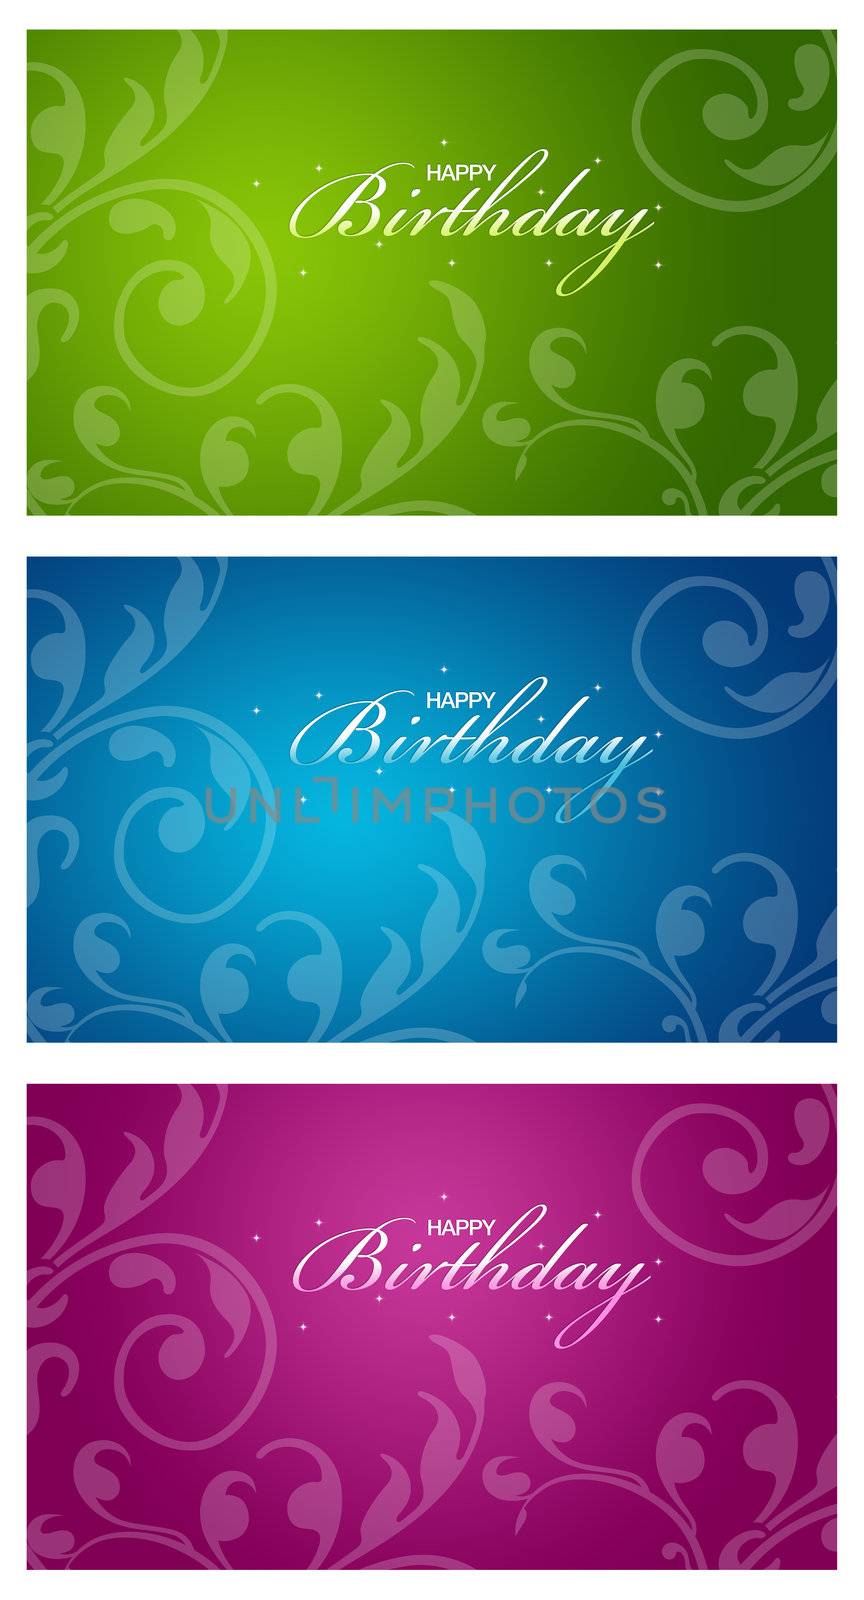 Colorful Birthday Cards by kbuntu